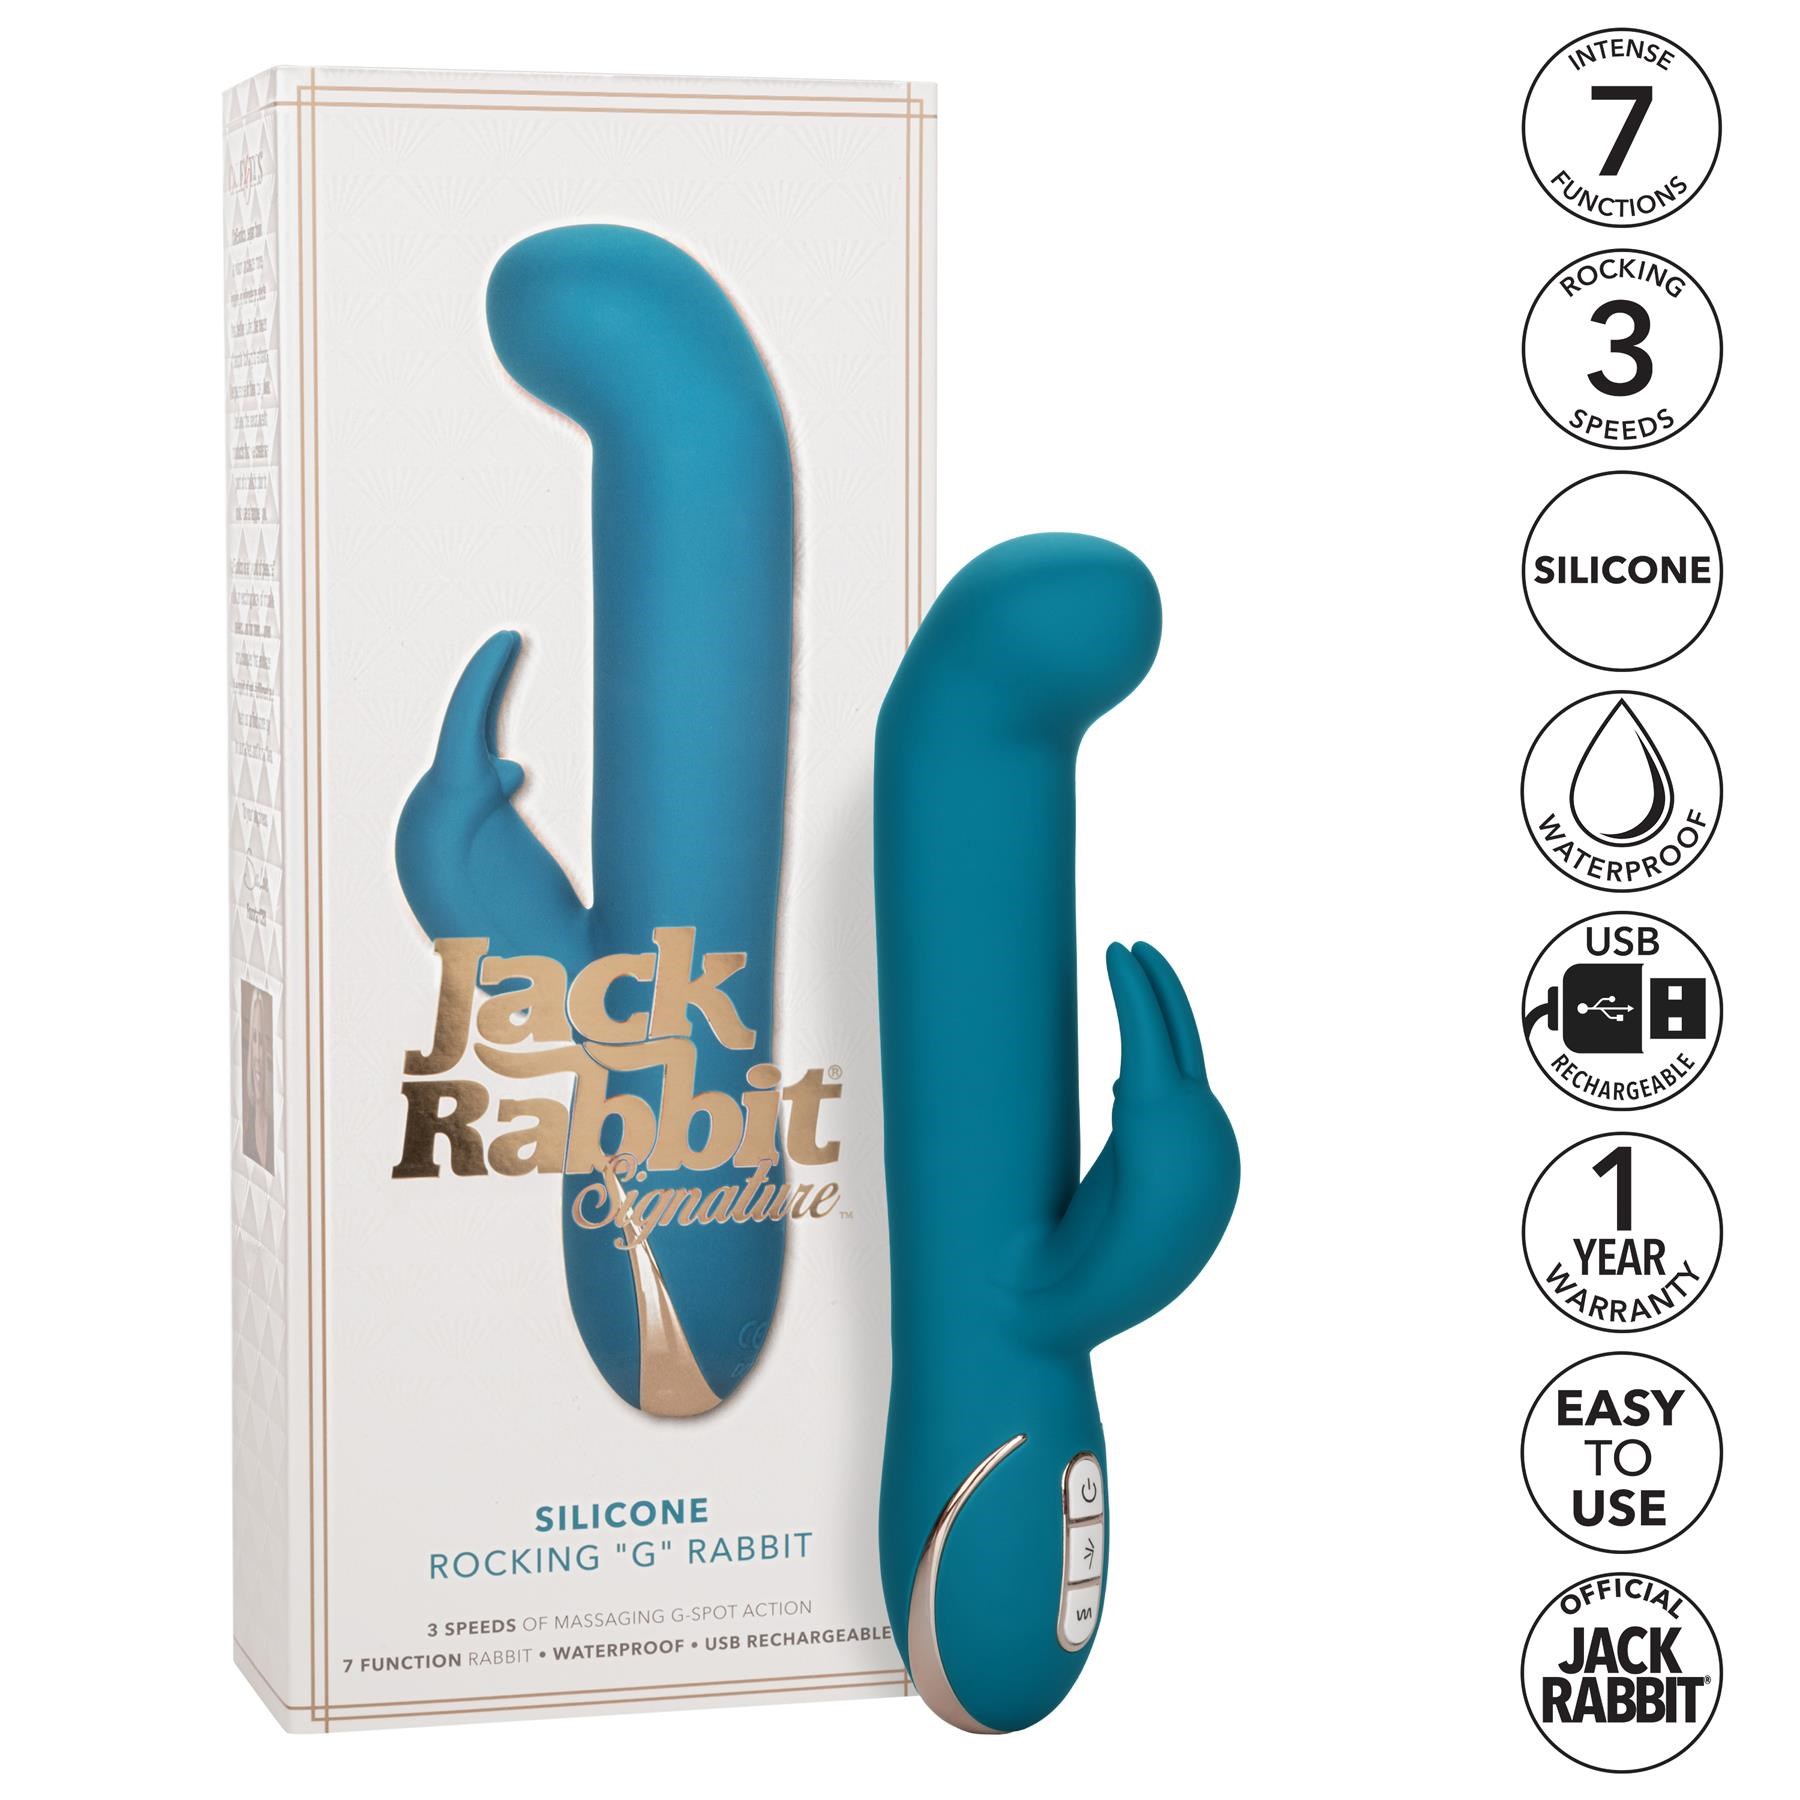 Jack Rabbit Signature Rocking G Rabbit - Features